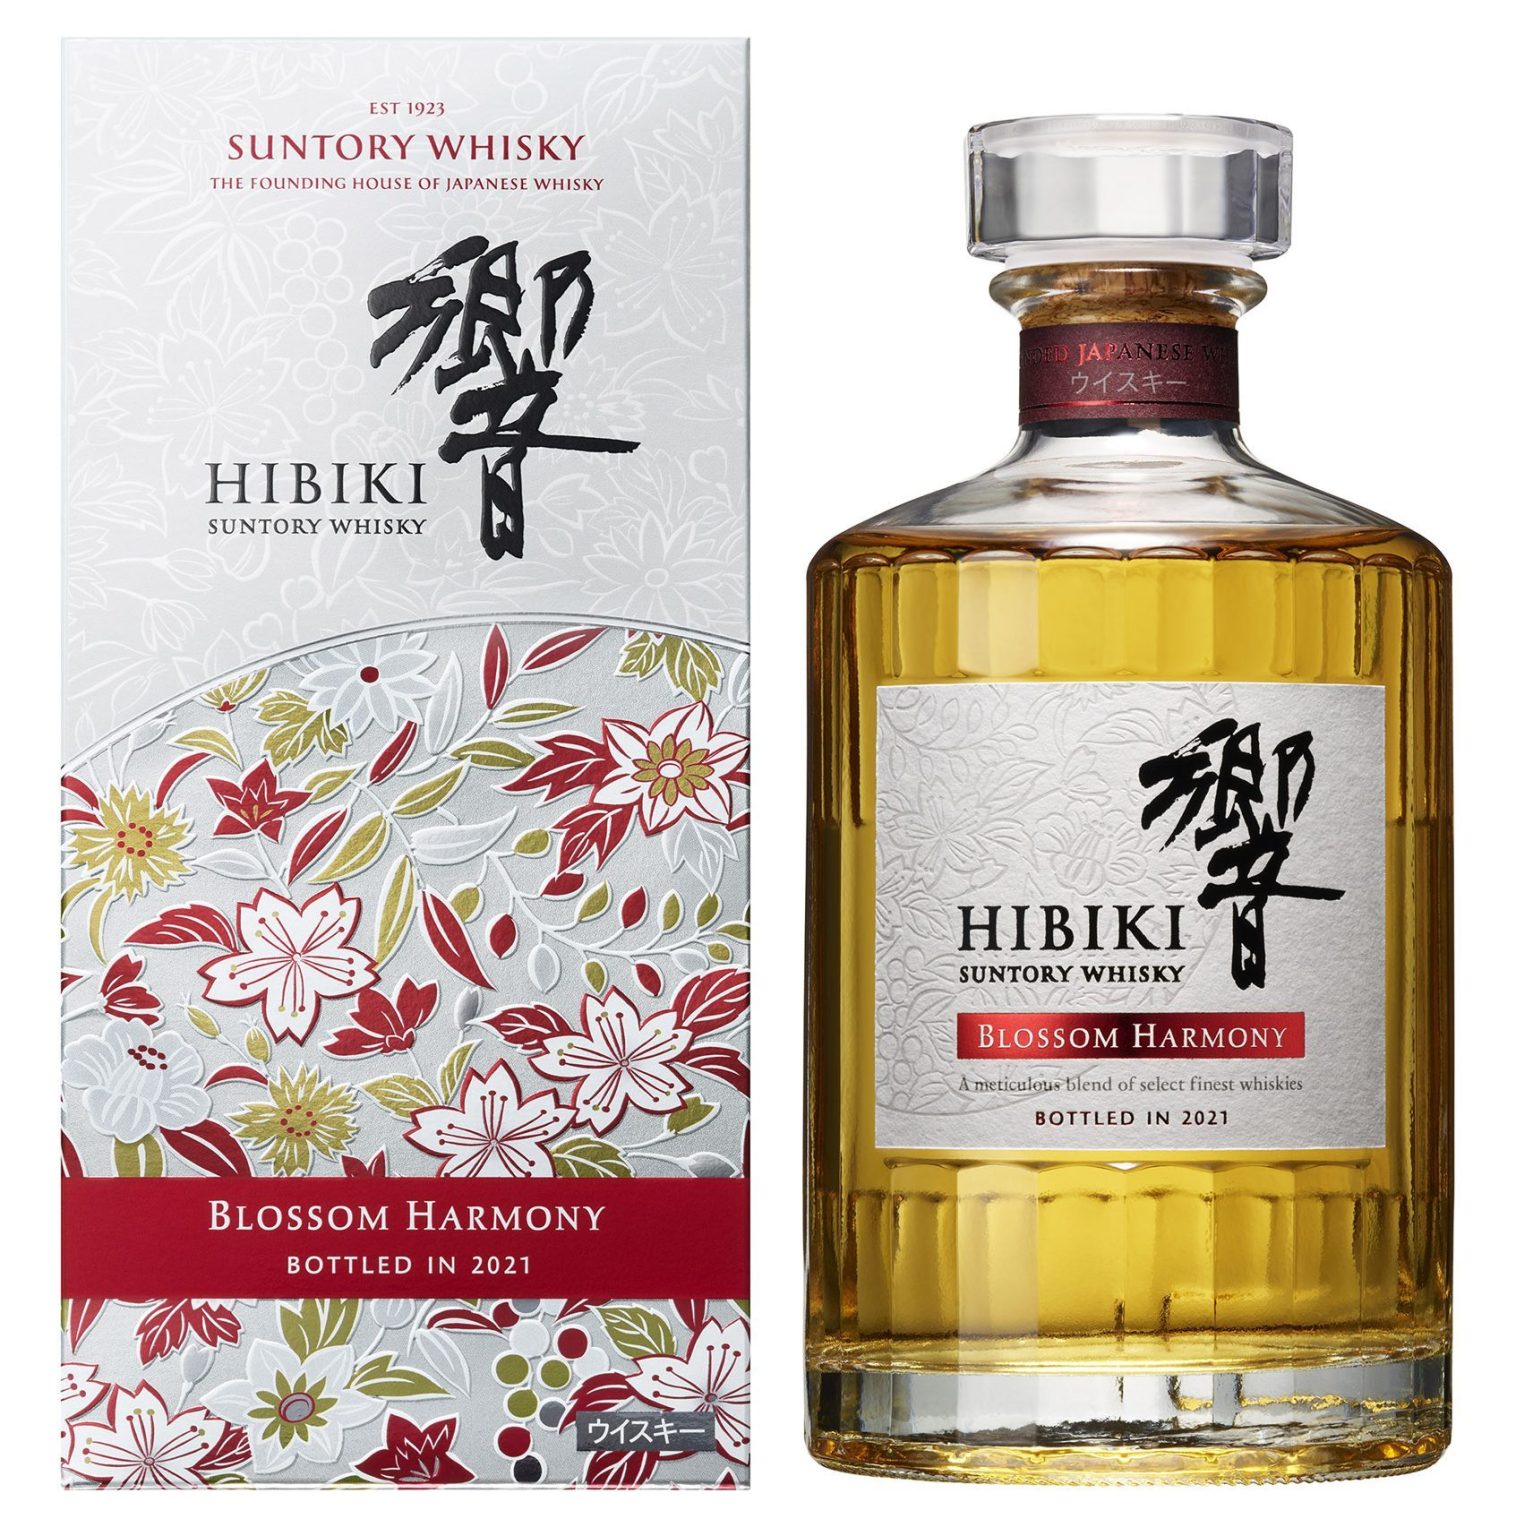 Japanese-whisky-Hibiki-Suntory-whiskey-special-limited-edition-cherry-blossom-harmony-news-photos-2-e1610108357109.jpg